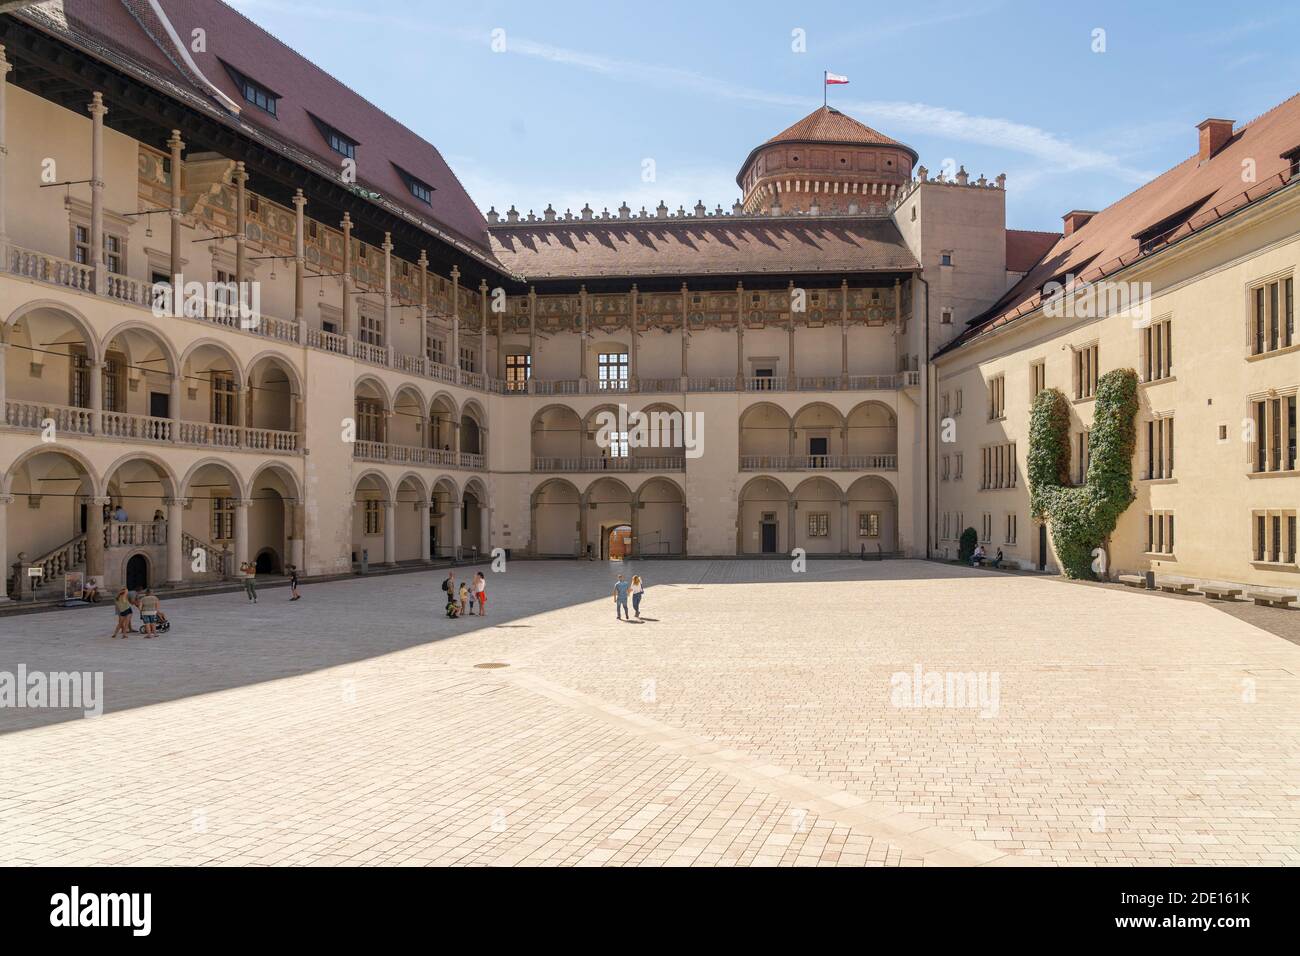 The 16th century Renaissance courtyard, Wawel Castle, UNESCO World Heritage Site, Krakow, Poland, Europe Stock Photo